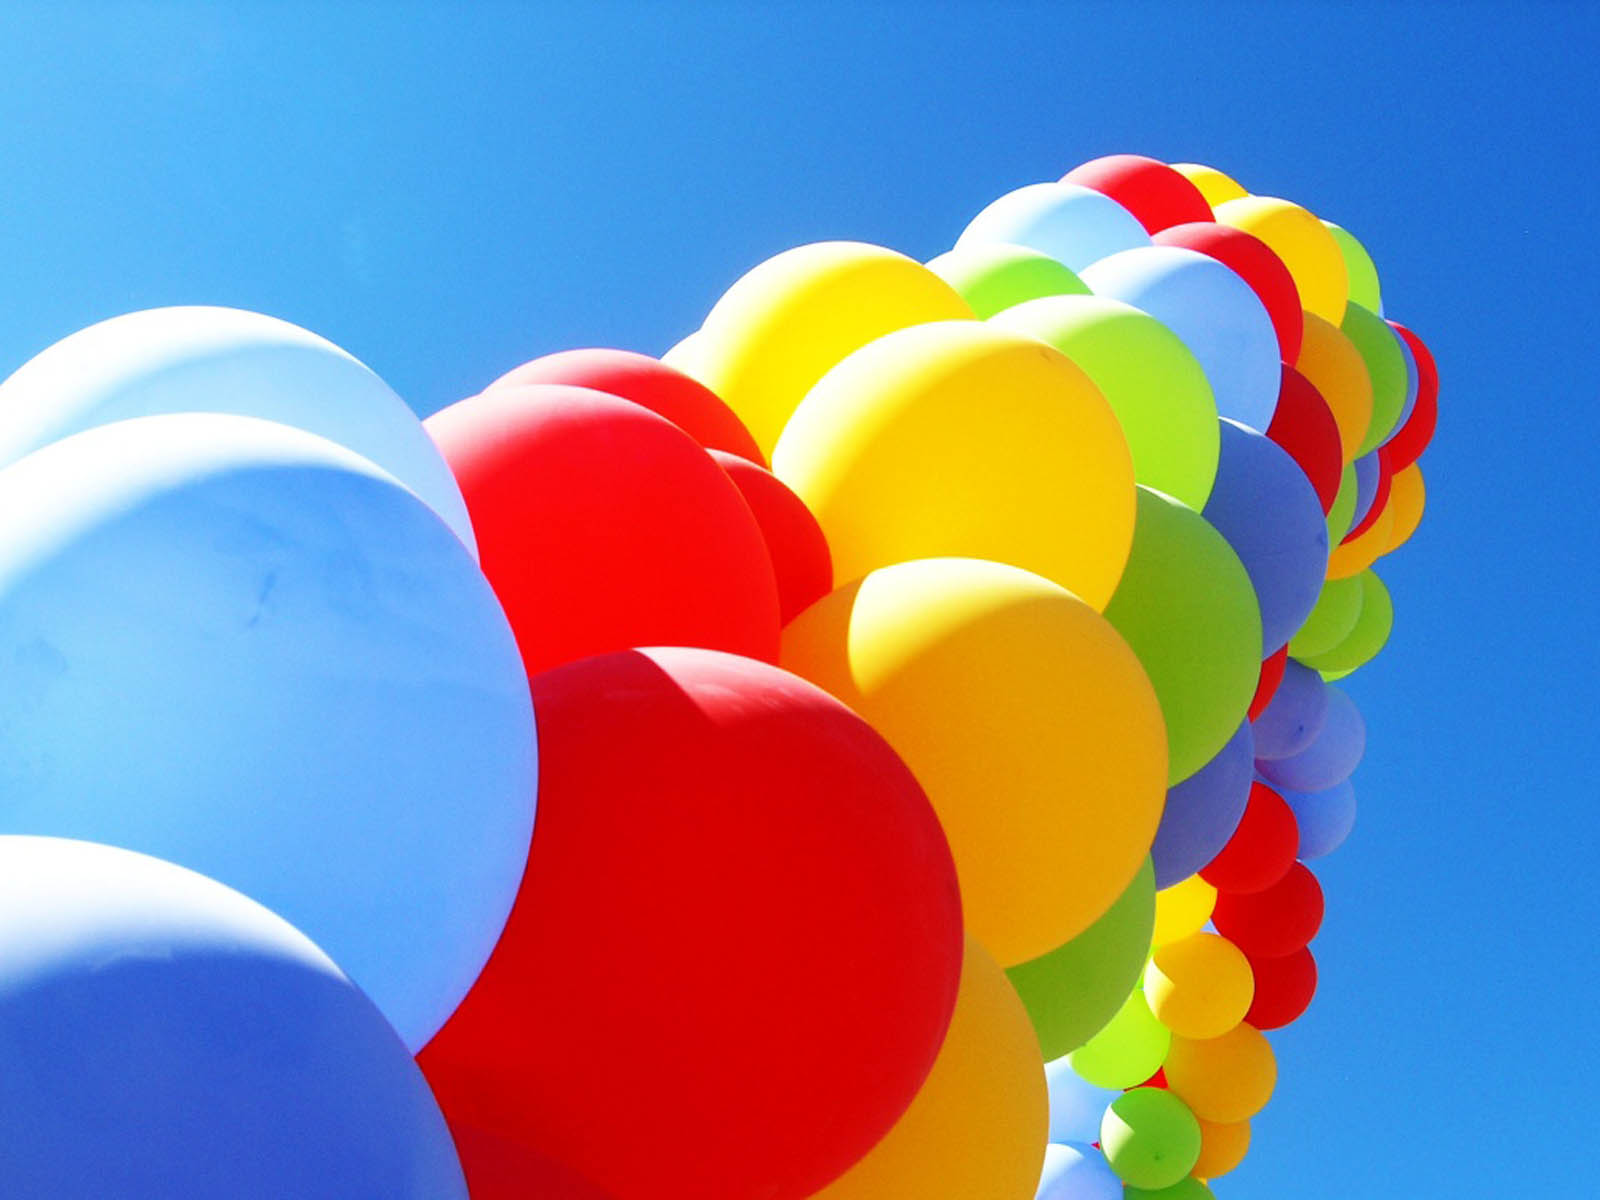  Gambar  Gambar  Balon dengan Warna  Warni  Cantik GUDANG GAMBAR 